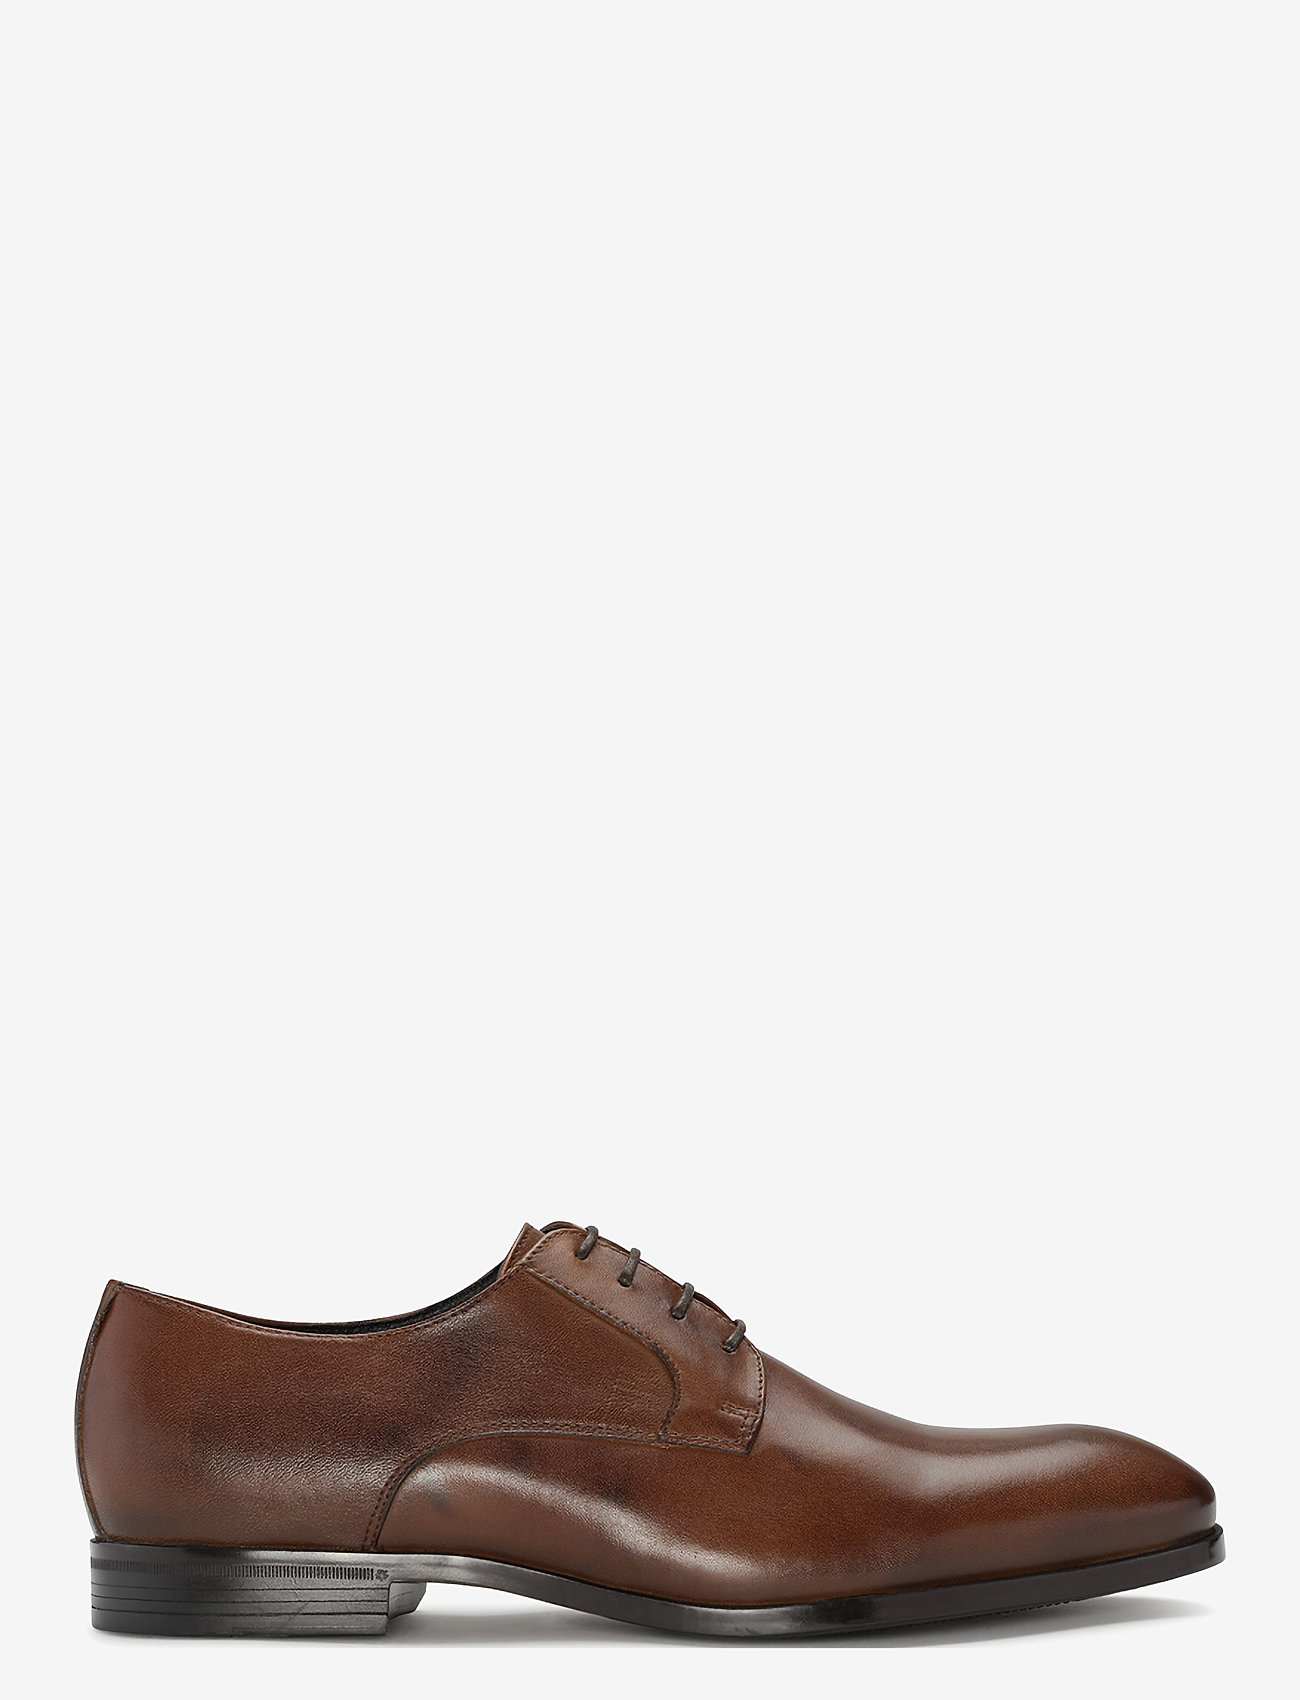 Playboy Footwear - PB10048 - nauhakengät - cognac leather - 1